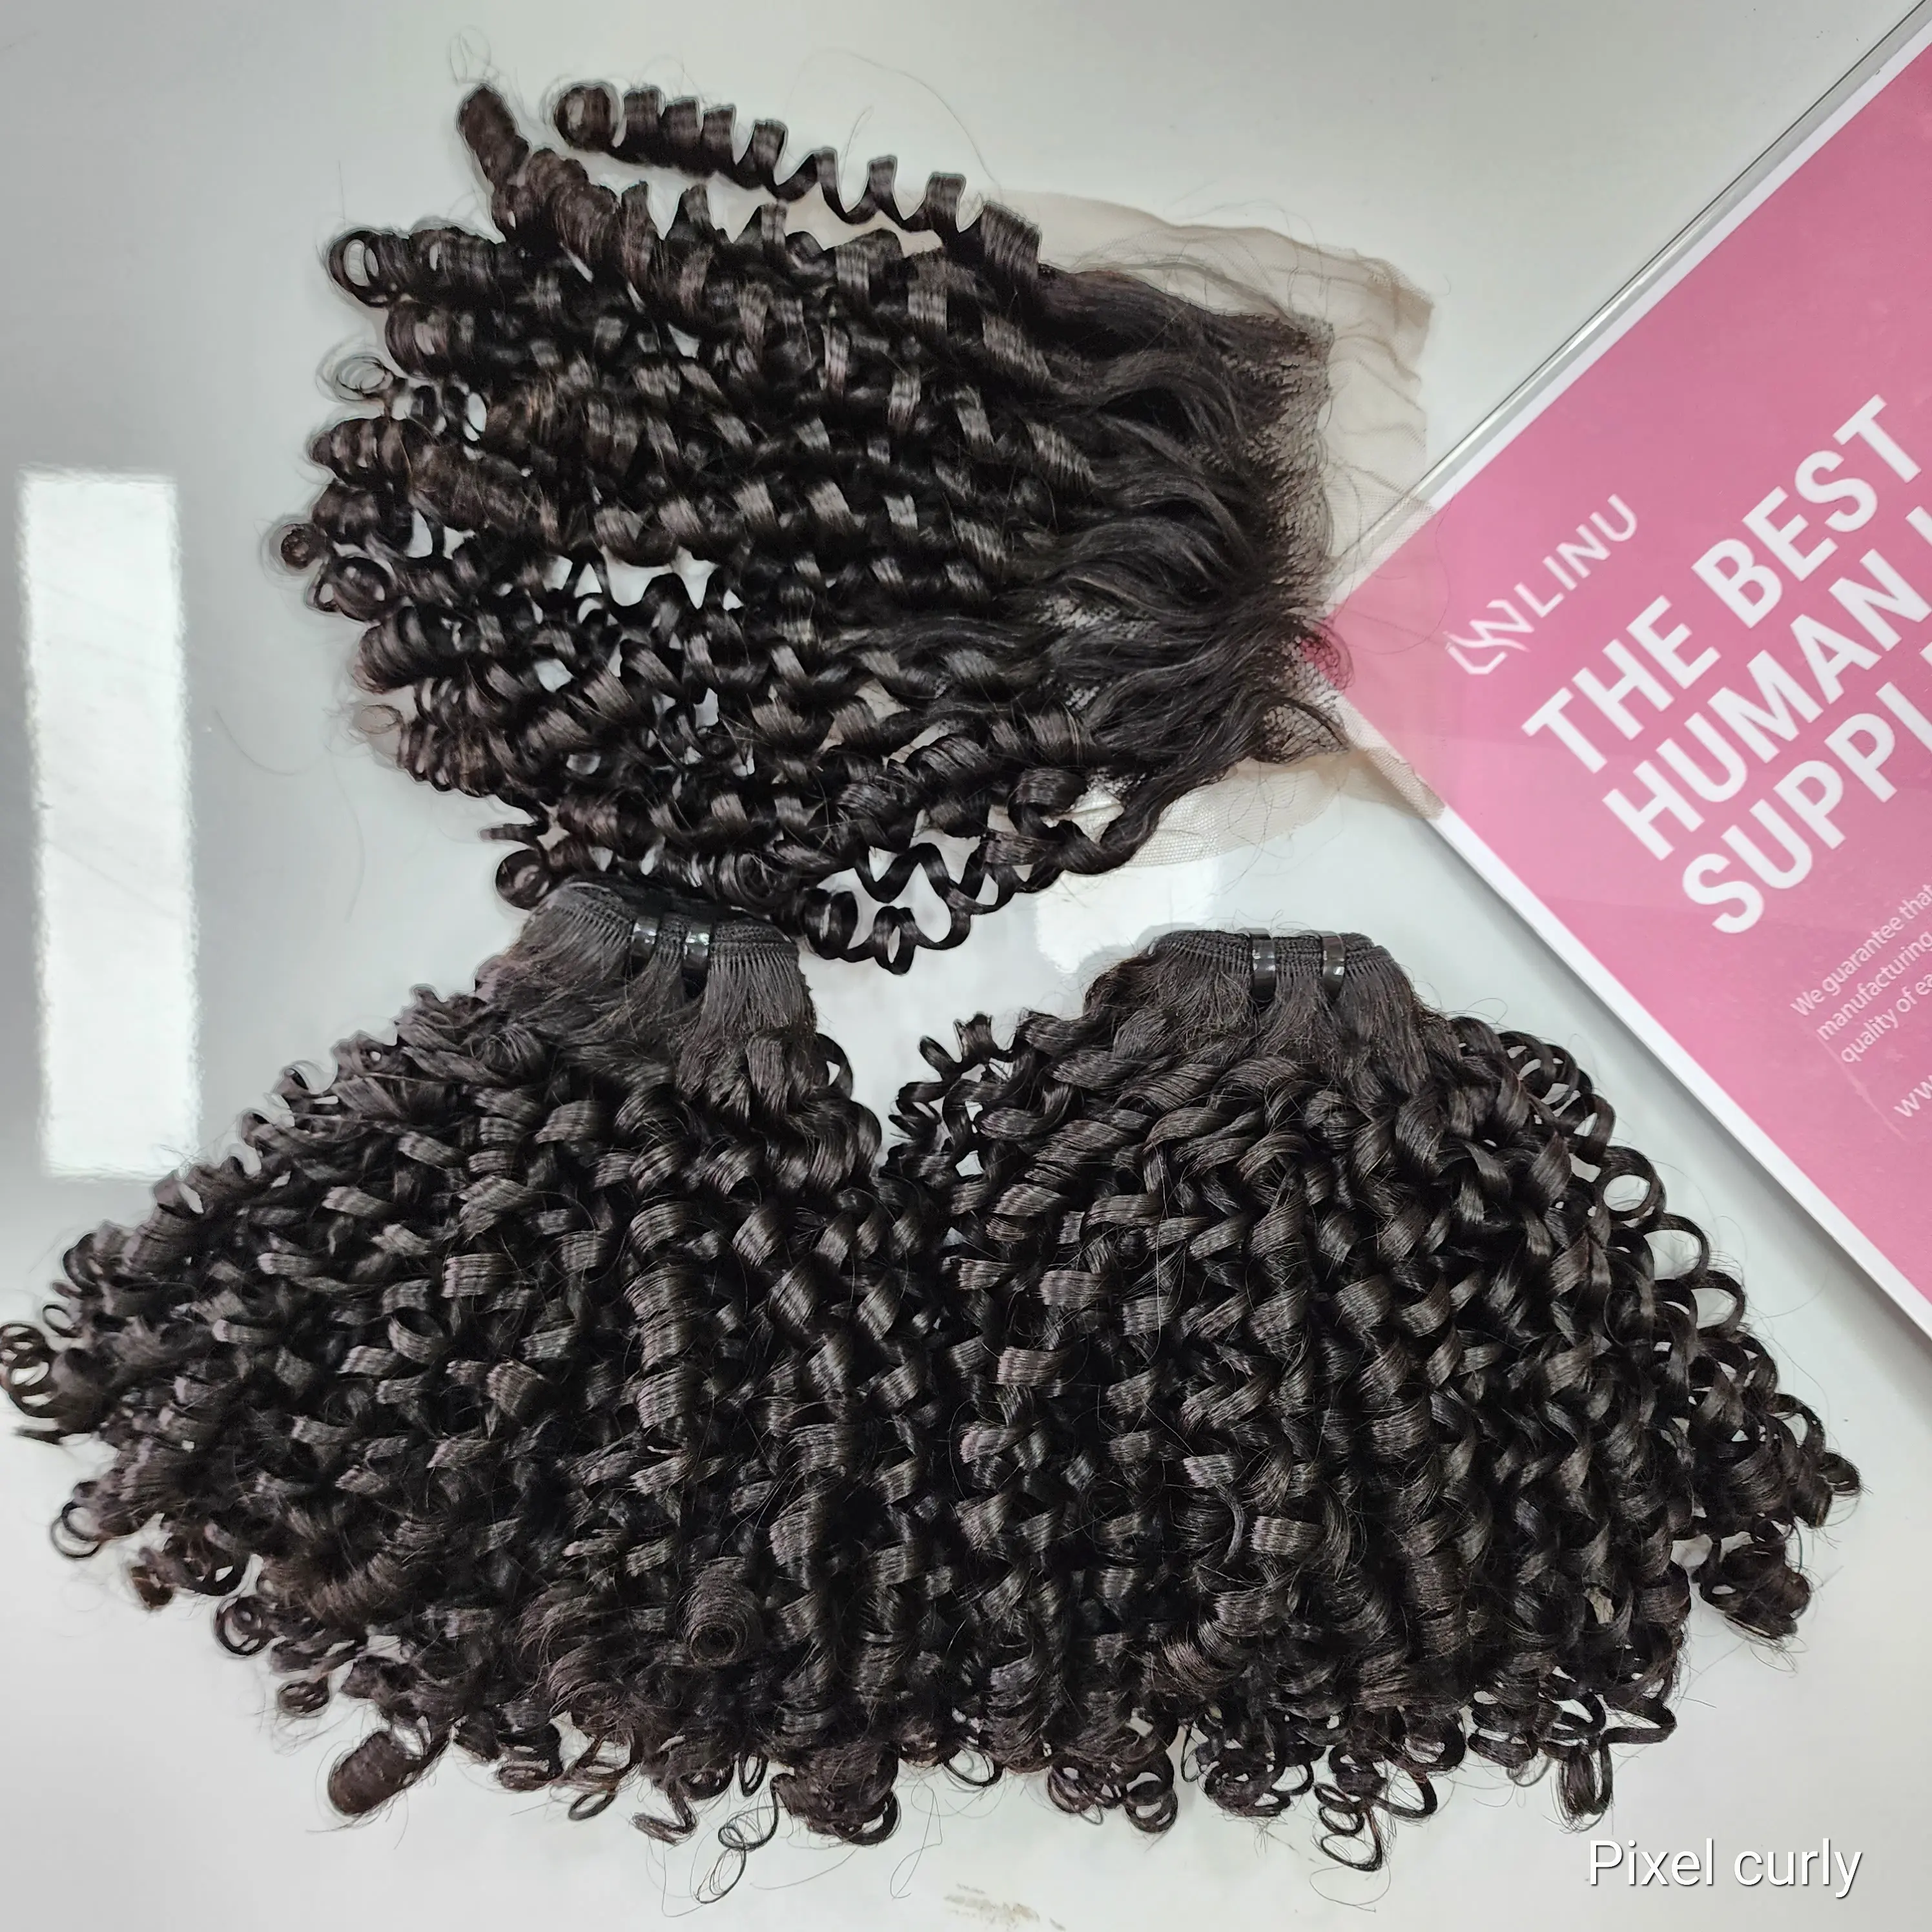 Pixiel curly Human Hair Bundles, 100% Unprocessed Human Hair, Weave Extension SDD Human Hair Bundles Vendors